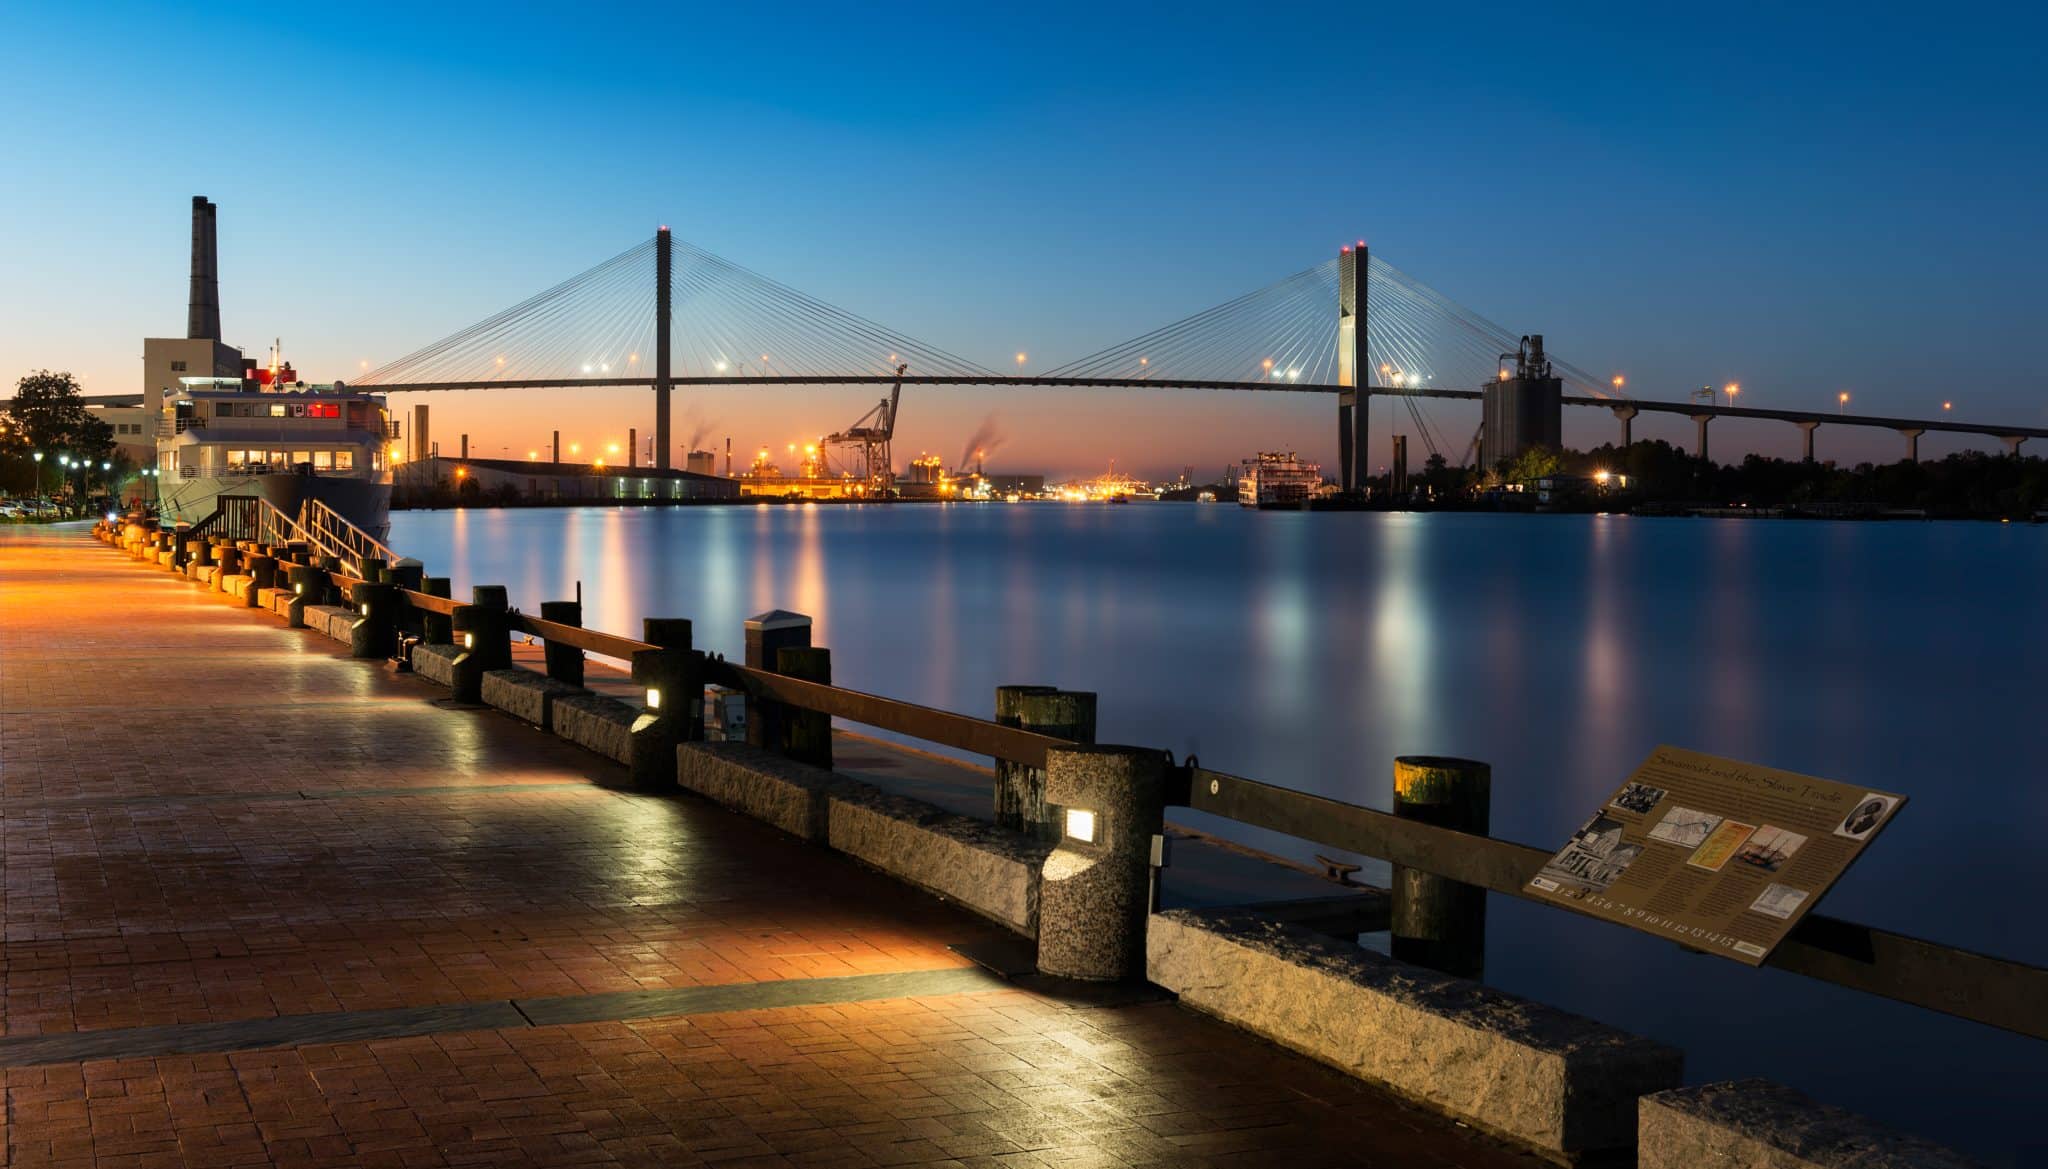 Talmadge Bridge project in Savannah gets green light